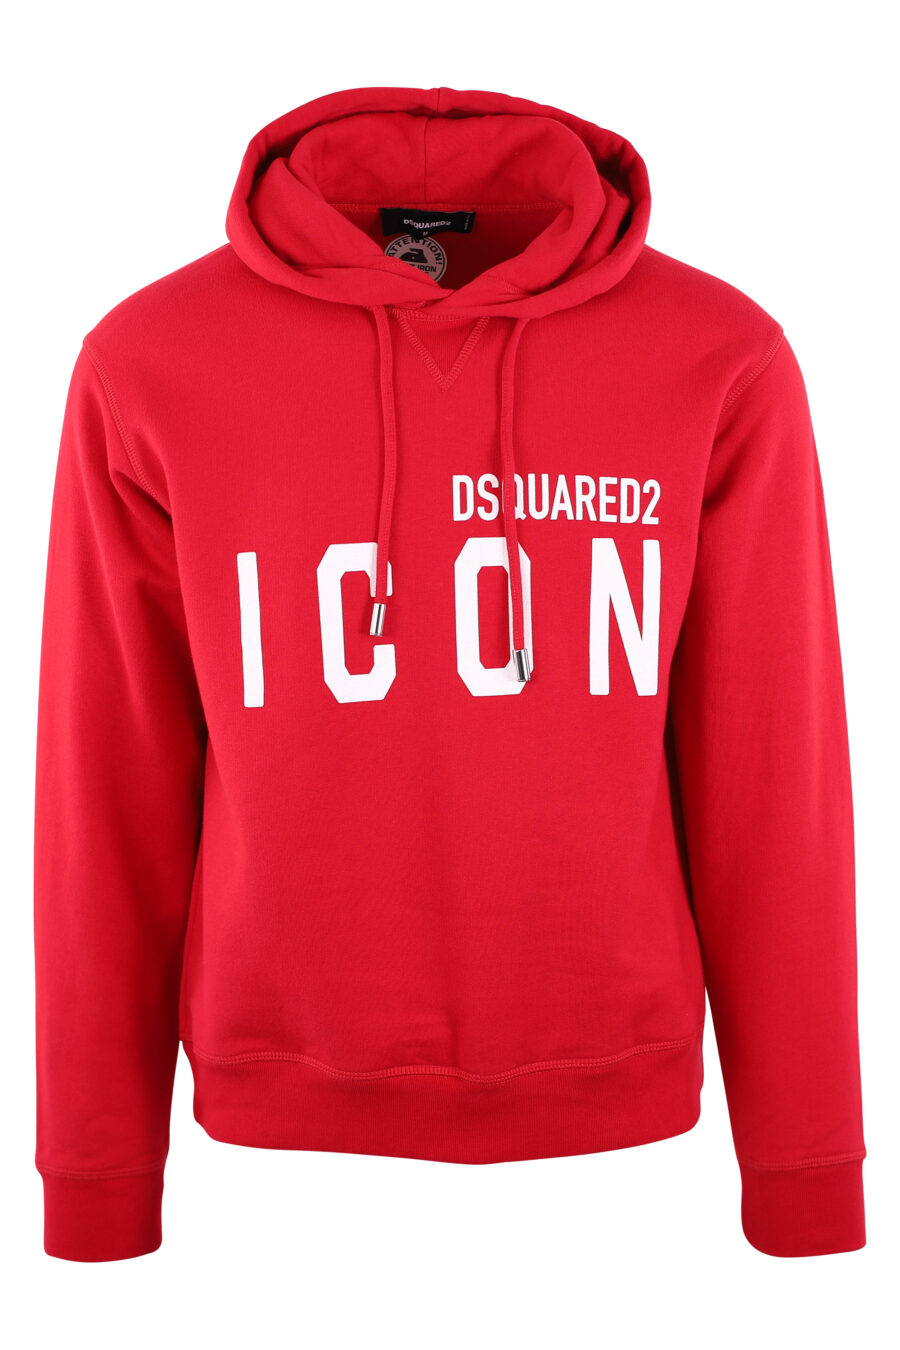 Sudadera con capucha roja oscura con logo "icon" - IMG 3151